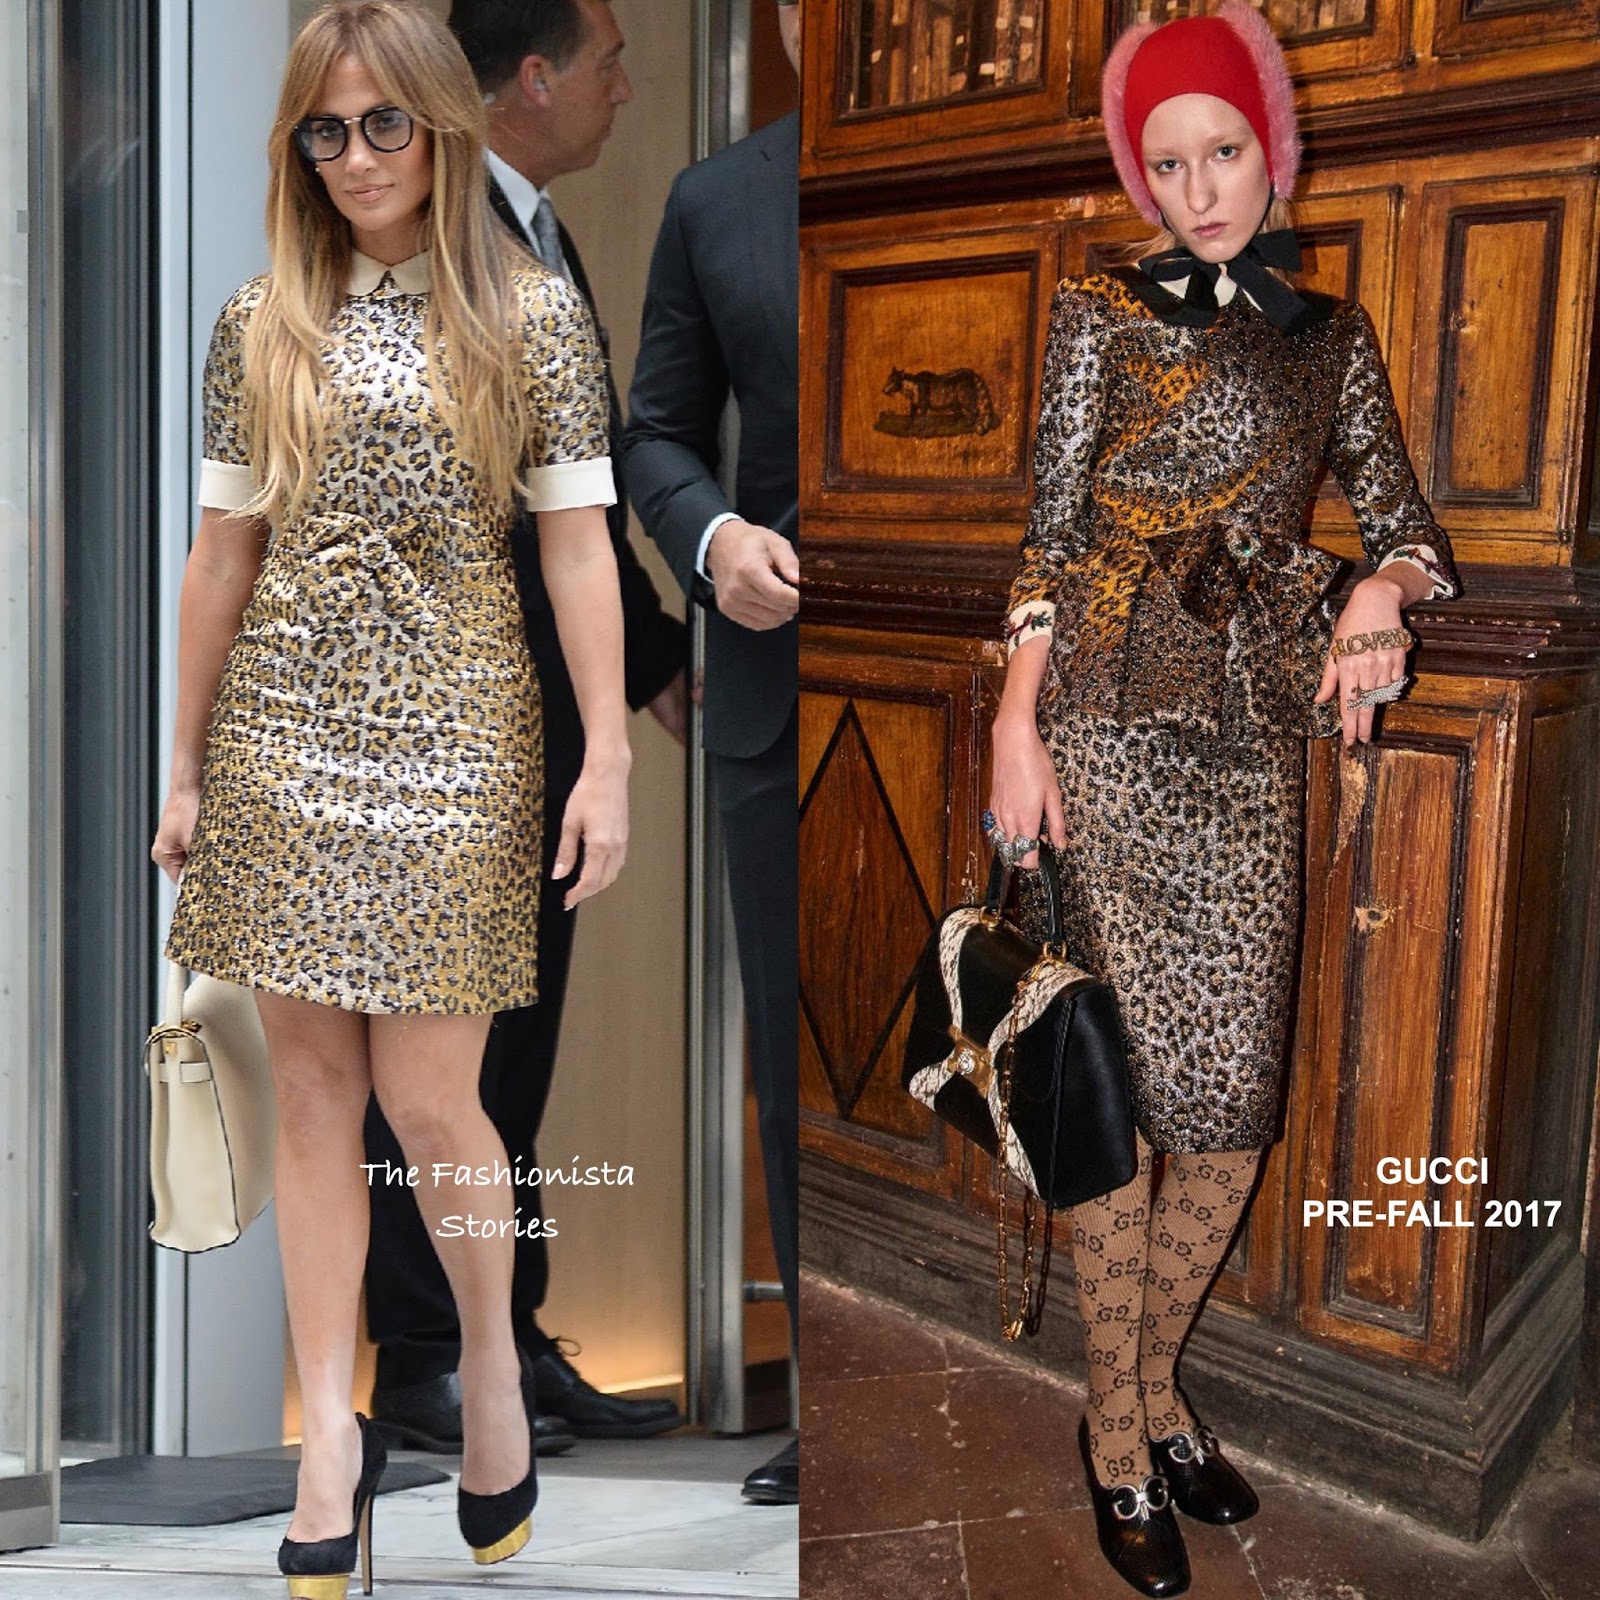 Gucci - Jennifer Lopez carrying the Gucci Bamboo Shopper, 2013